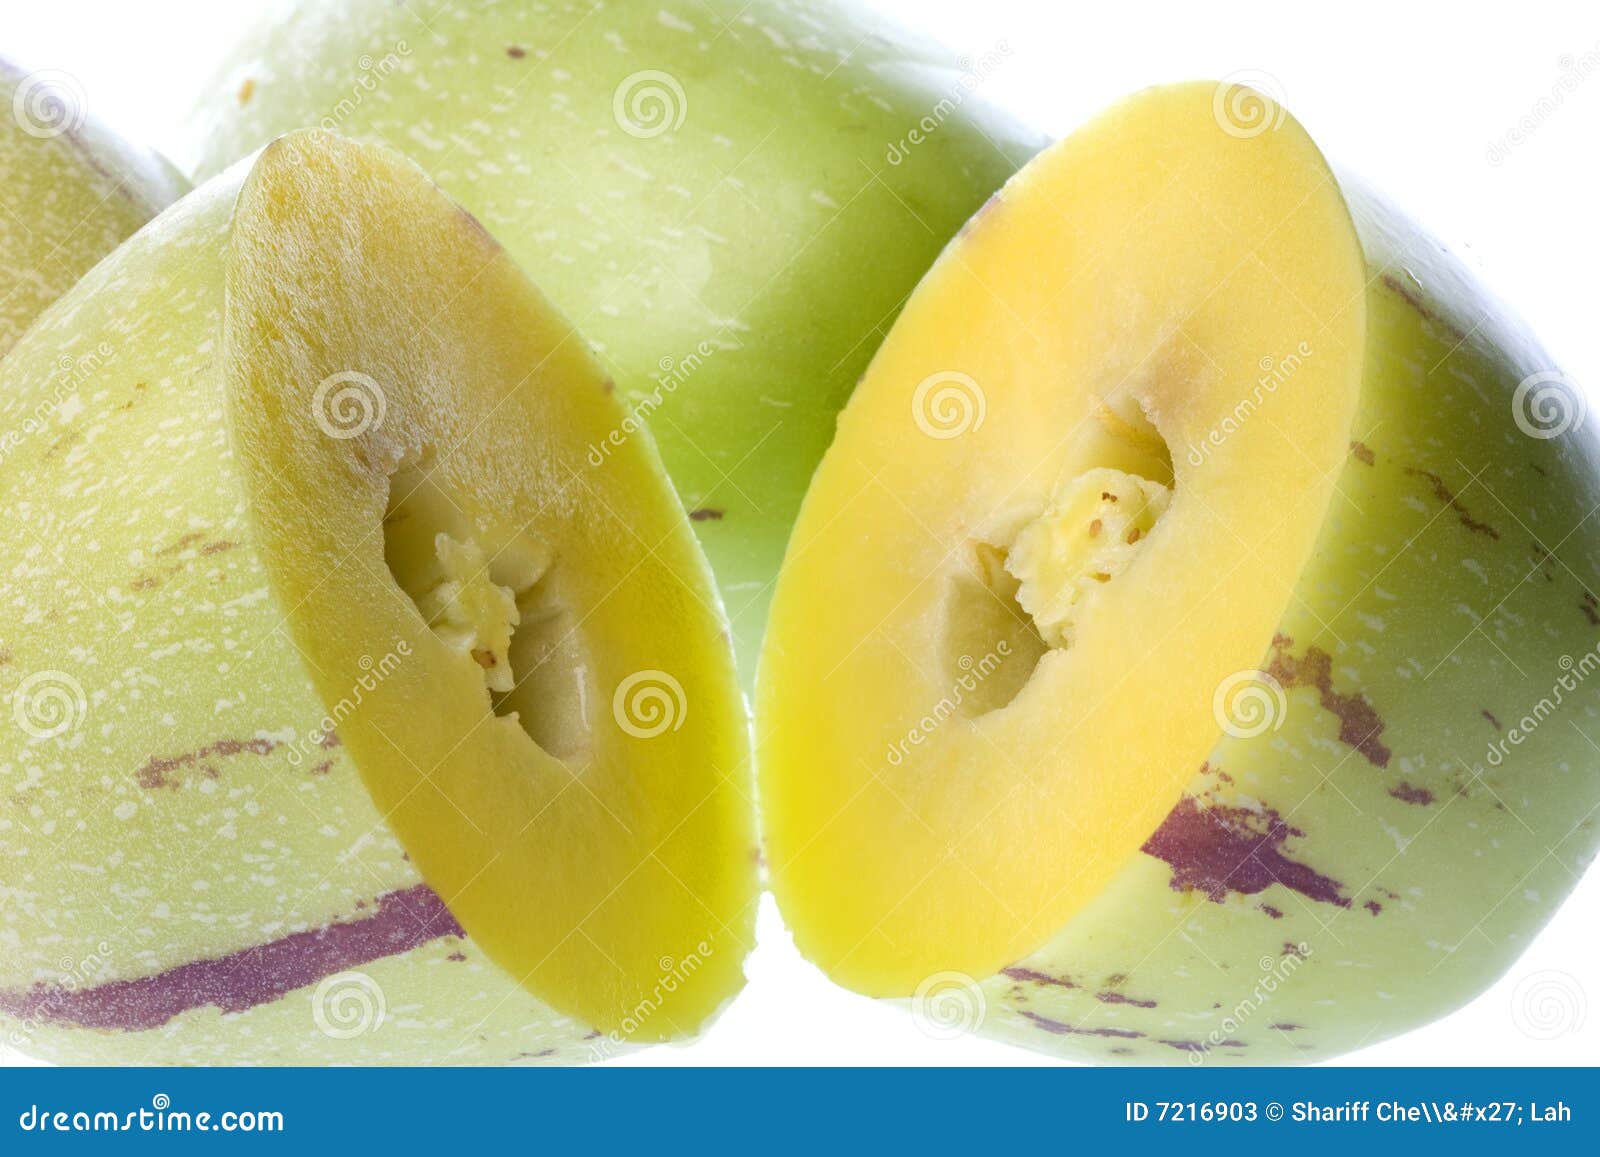 pepino dulce (melon pears) 